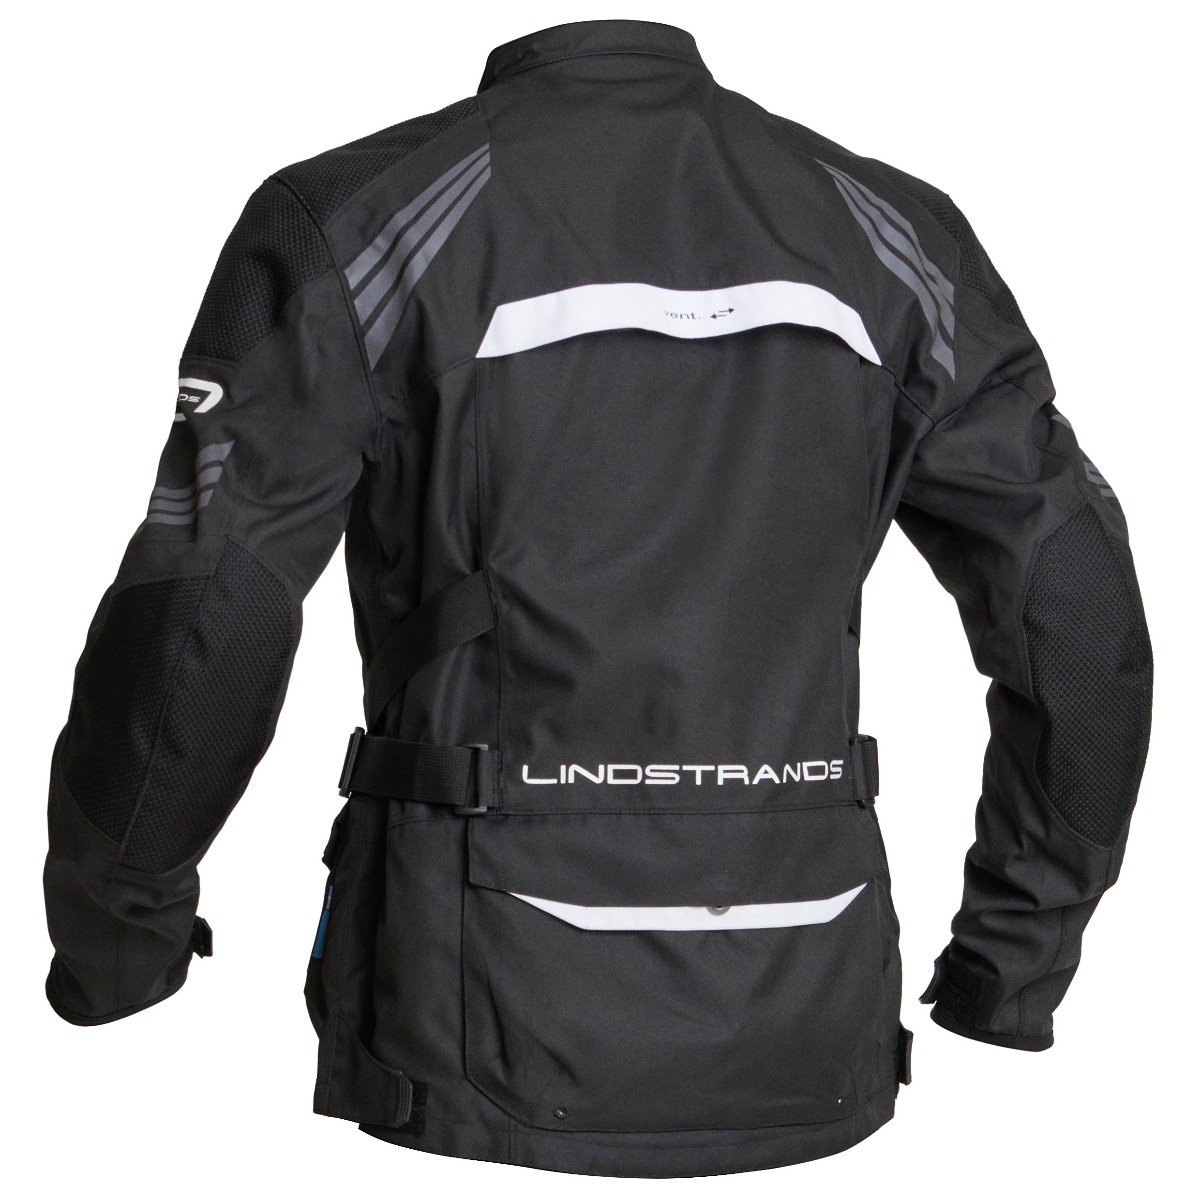 Image of Lindstrands Transtrand Jacket Black White Size 58 ID 6438235187908